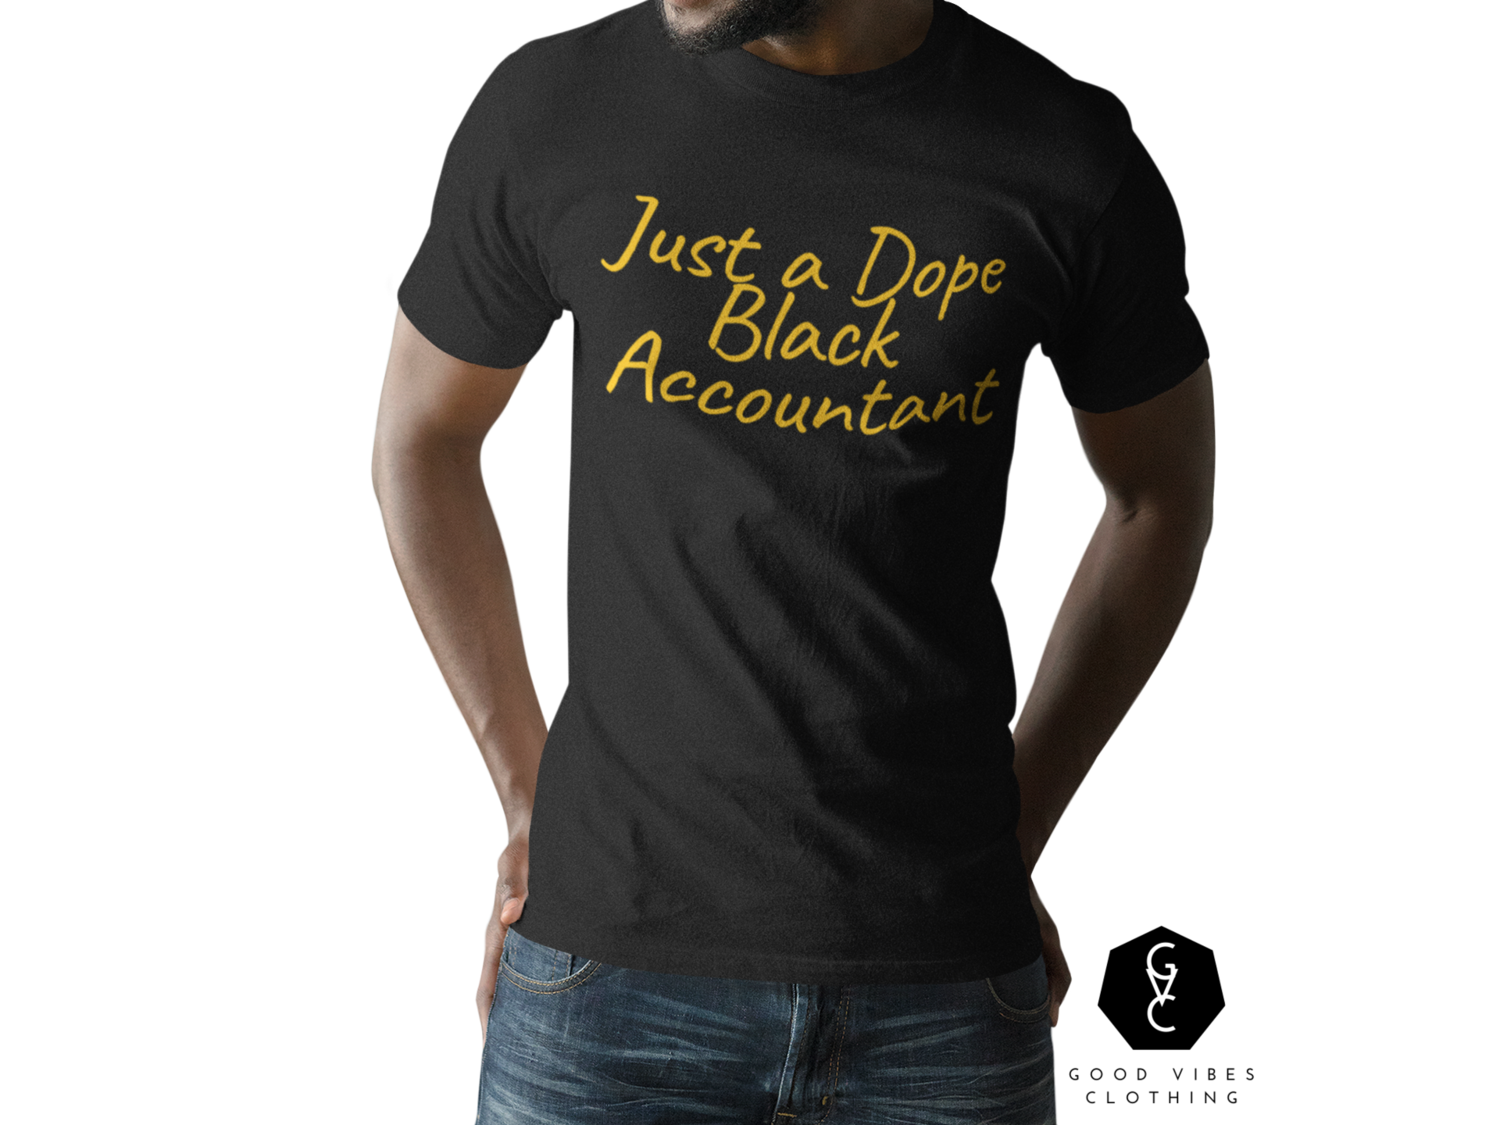 Dope Accountant